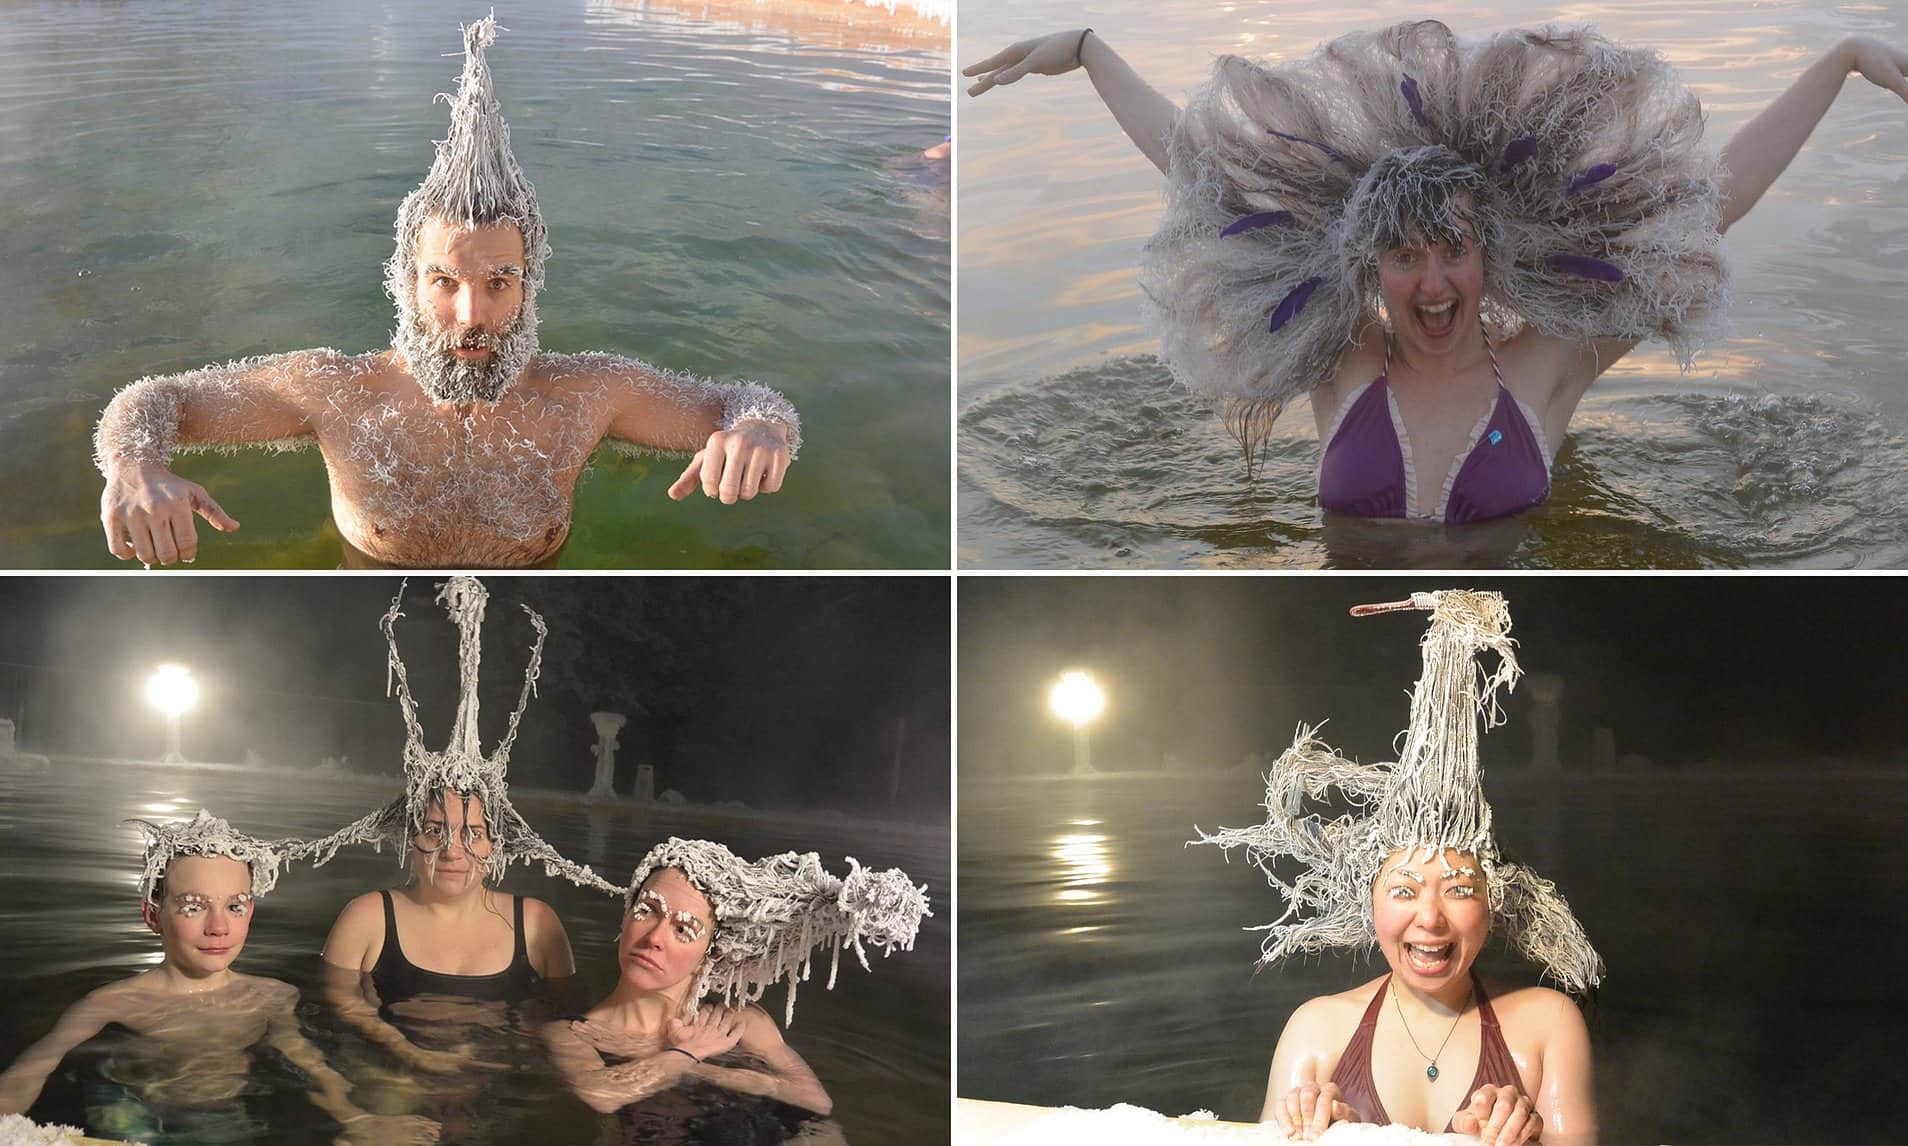 Hair freezing contestants posing